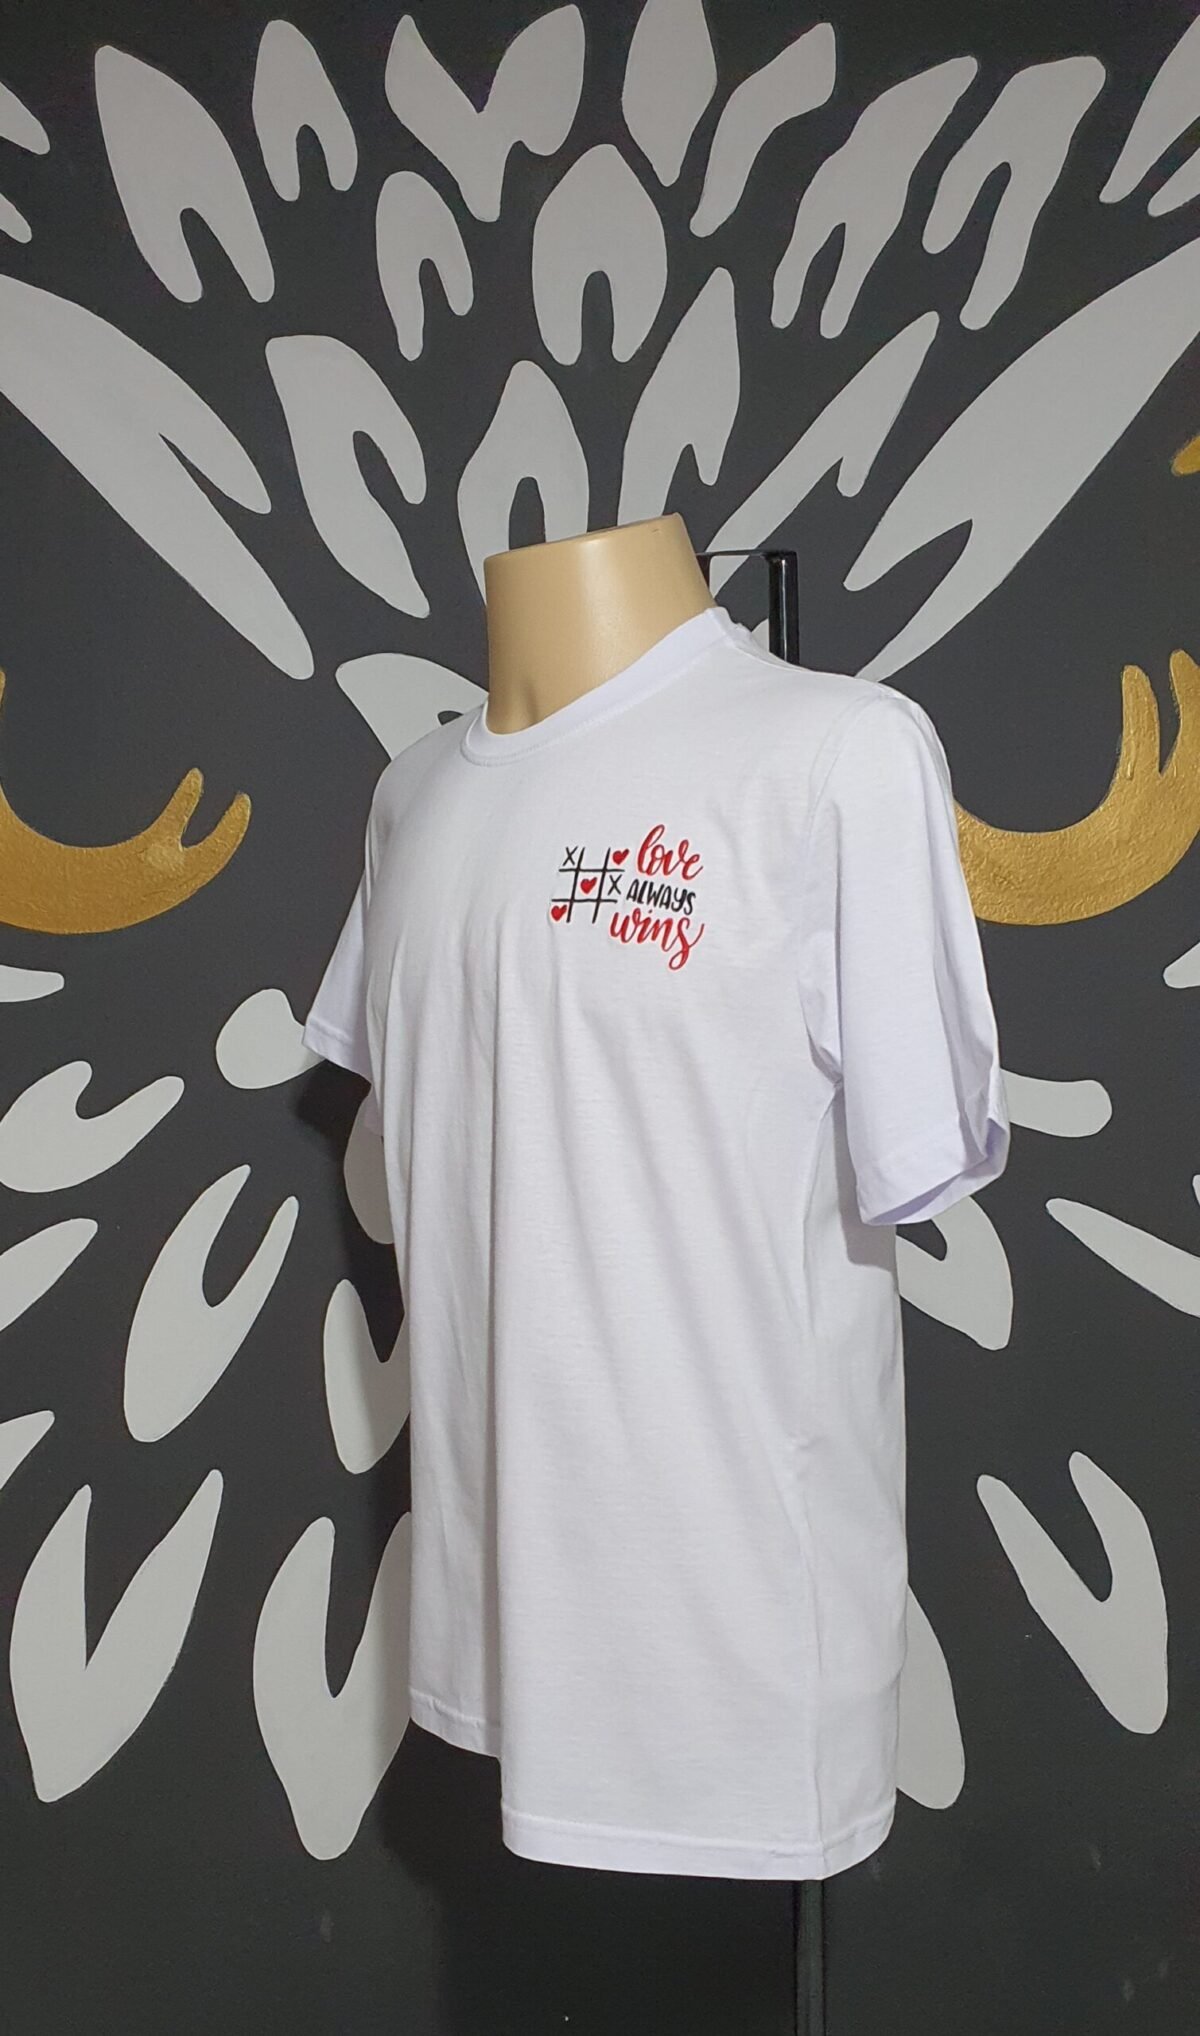 Camiseta Bordada "Love Aways Wins" by Bordado & Cia - @bordado.cia